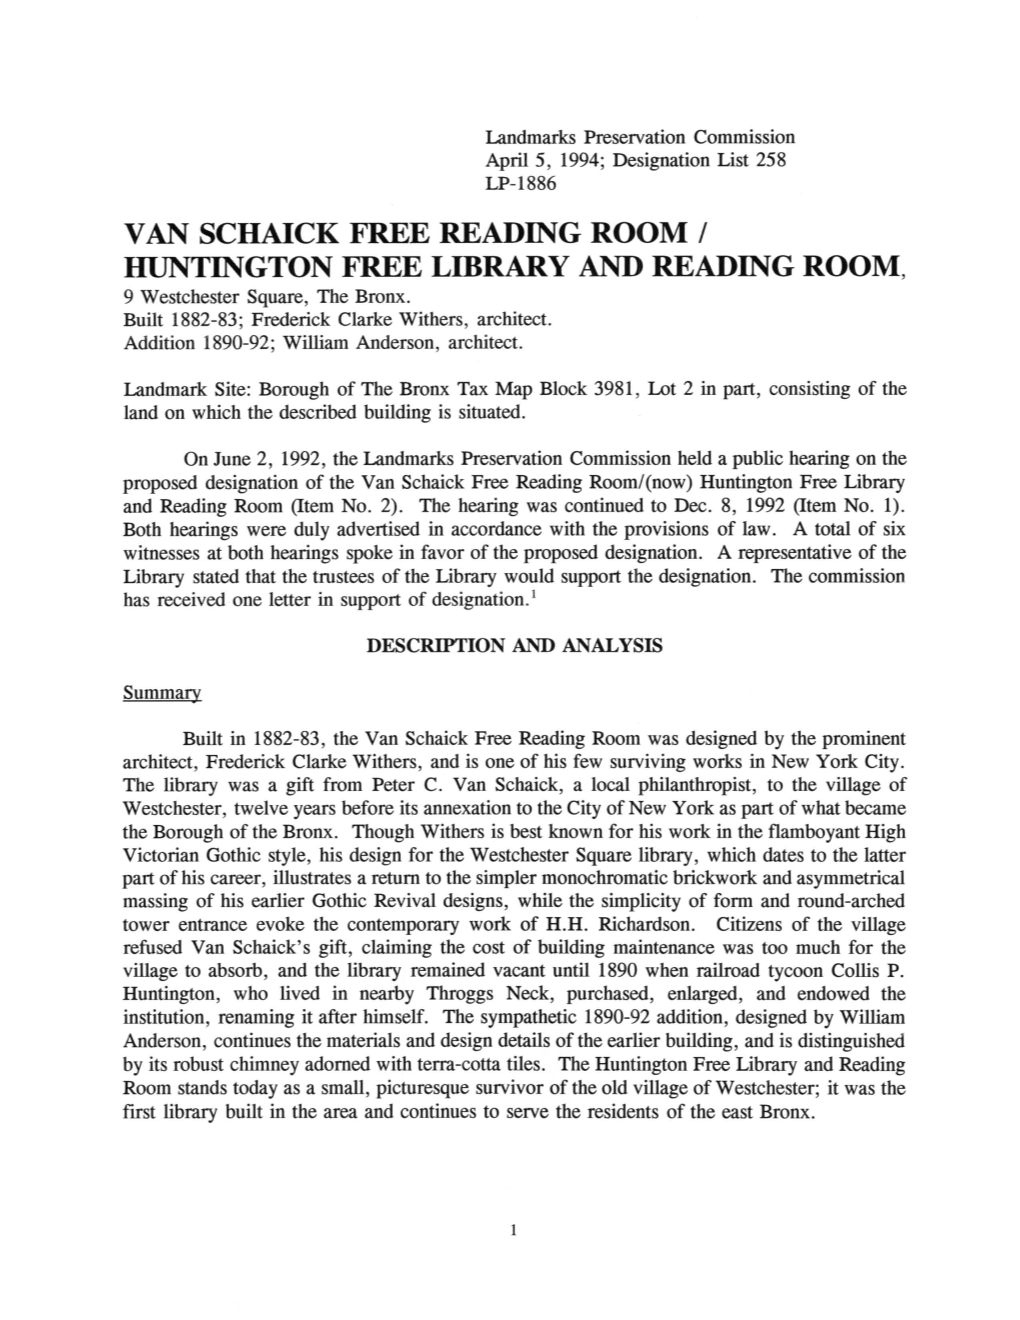 Van Schaick Free Reading Room/Huntington Free Library And